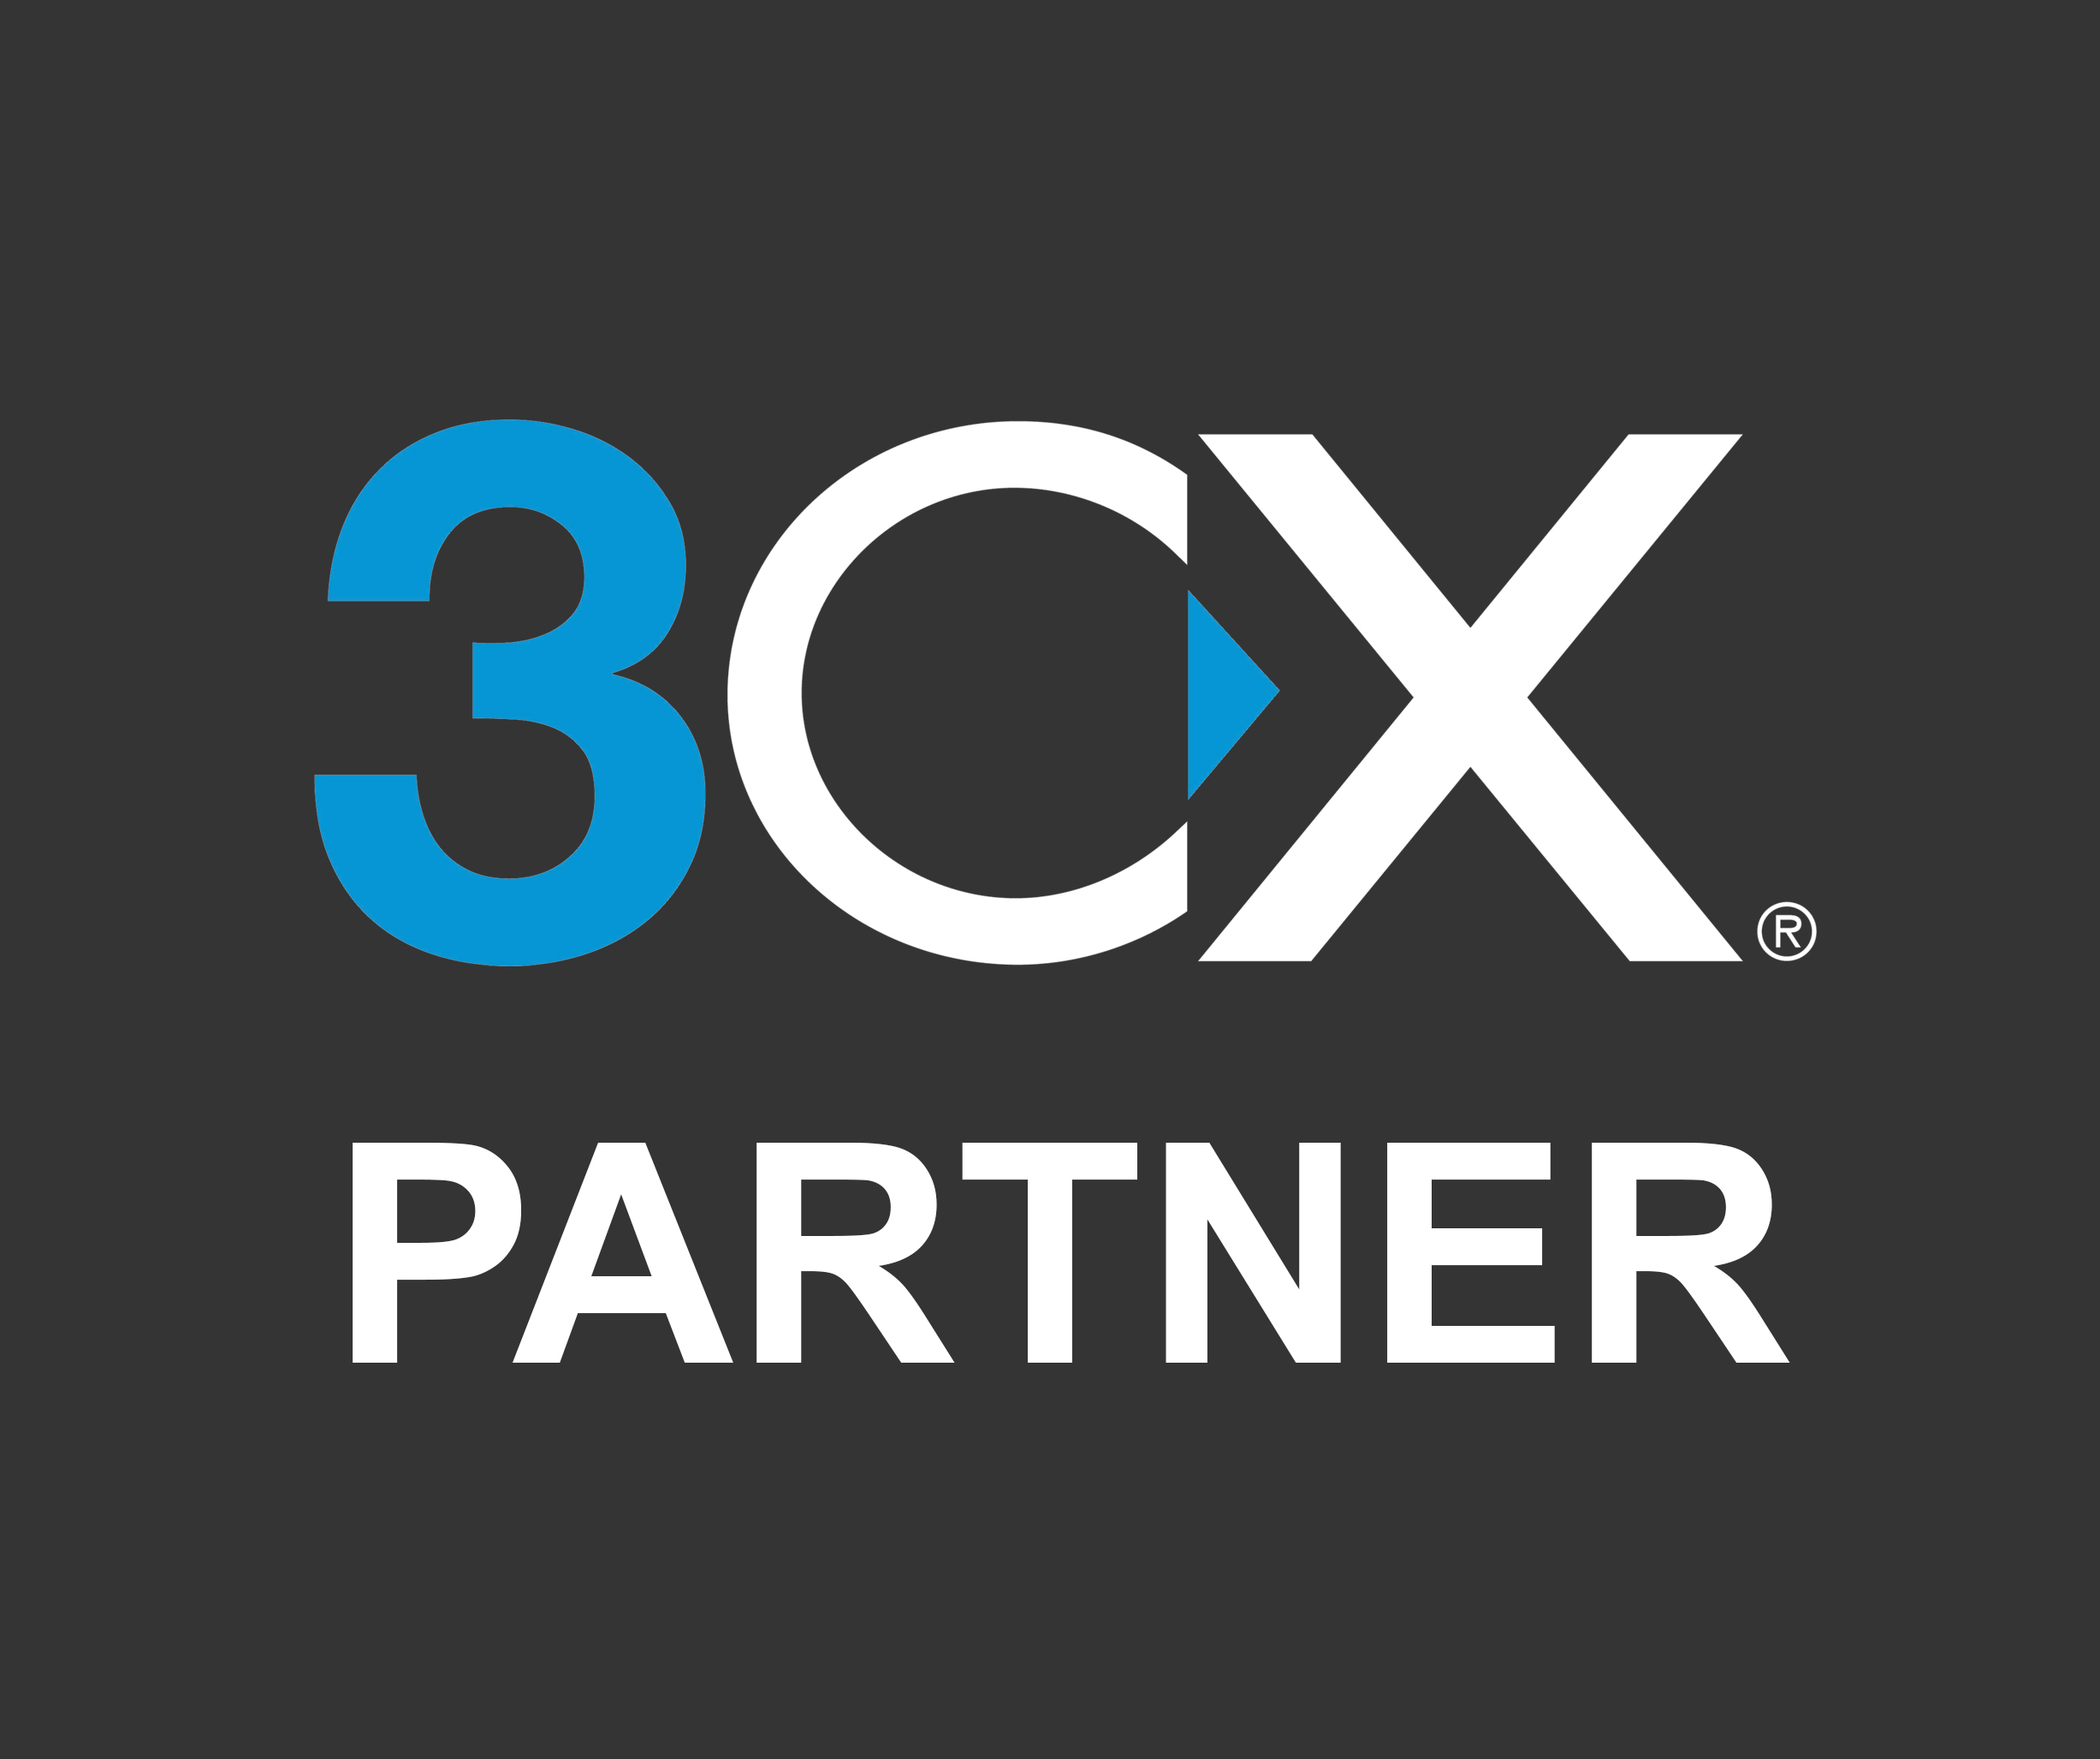 3cx partner image